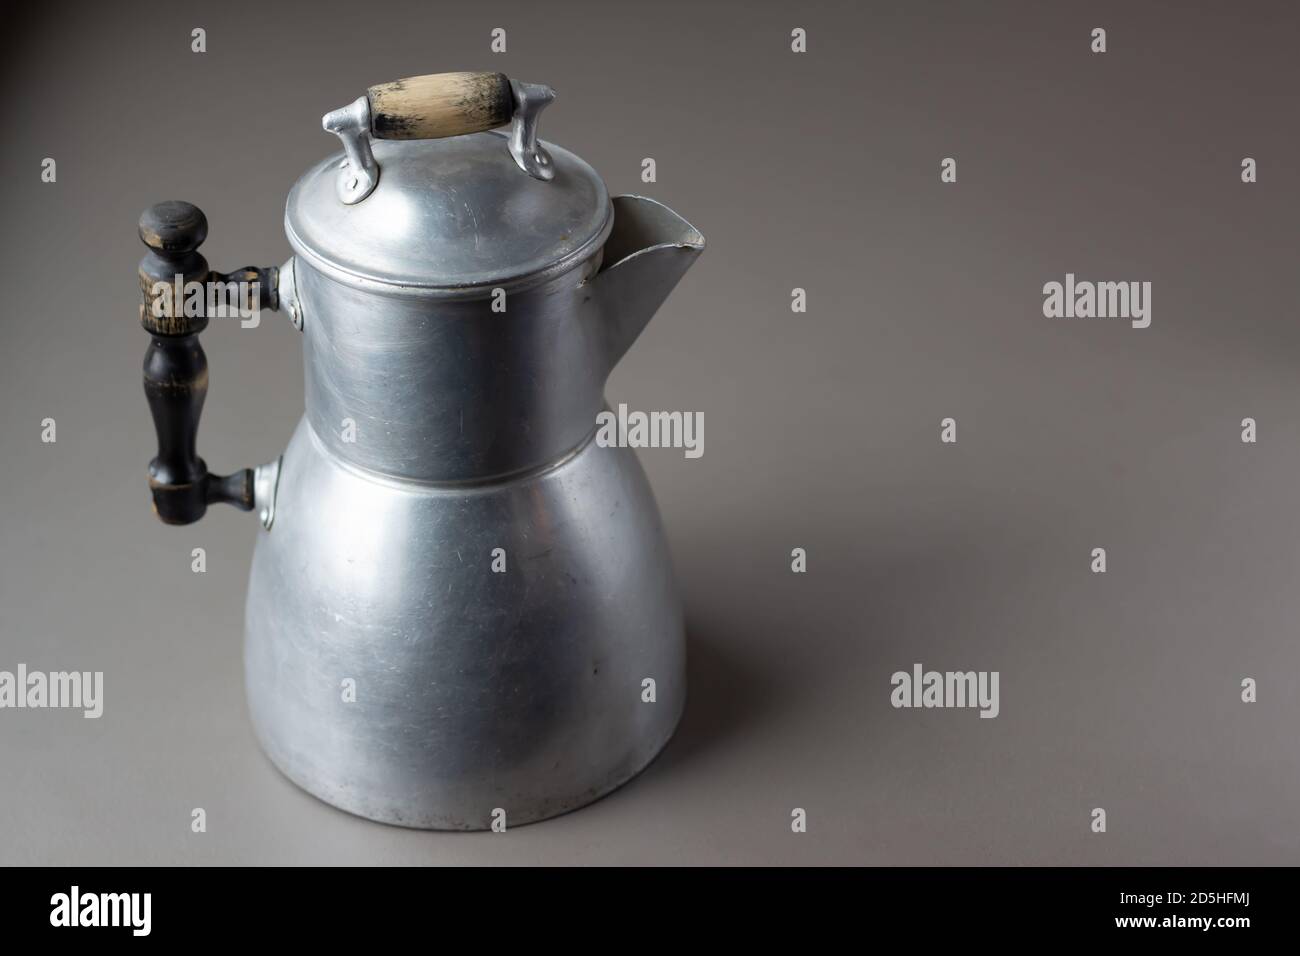 https://c8.alamy.com/comp/2D5HFMJ/historic-vintage-coffee-pot-over-100-years-old-coffee-percolator-2D5HFMJ.jpg